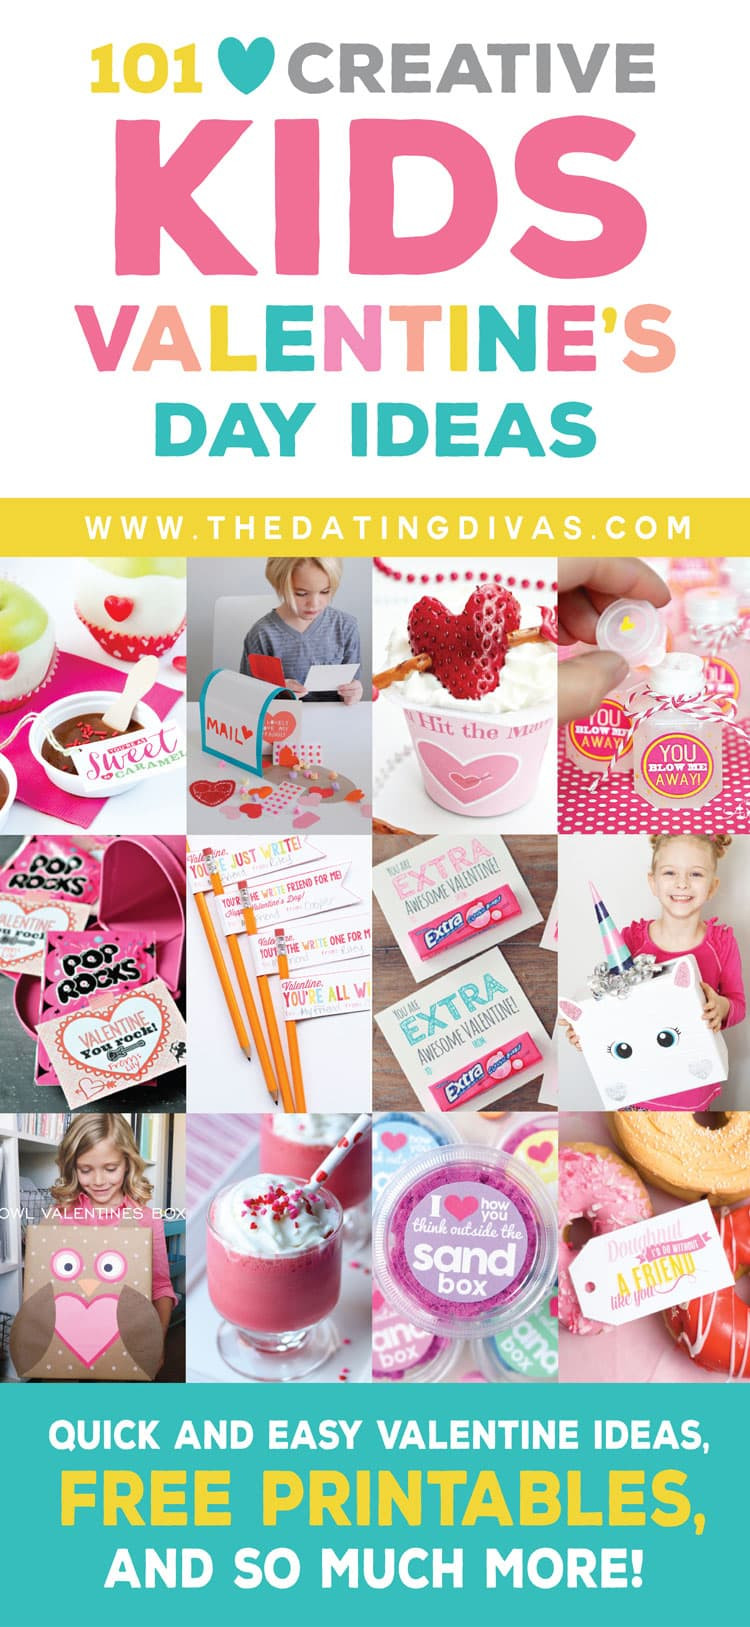 Valentine'S Day Creative Gift Ideas
 100 Kids Valentine s Day Ideas Treats Gifts & More